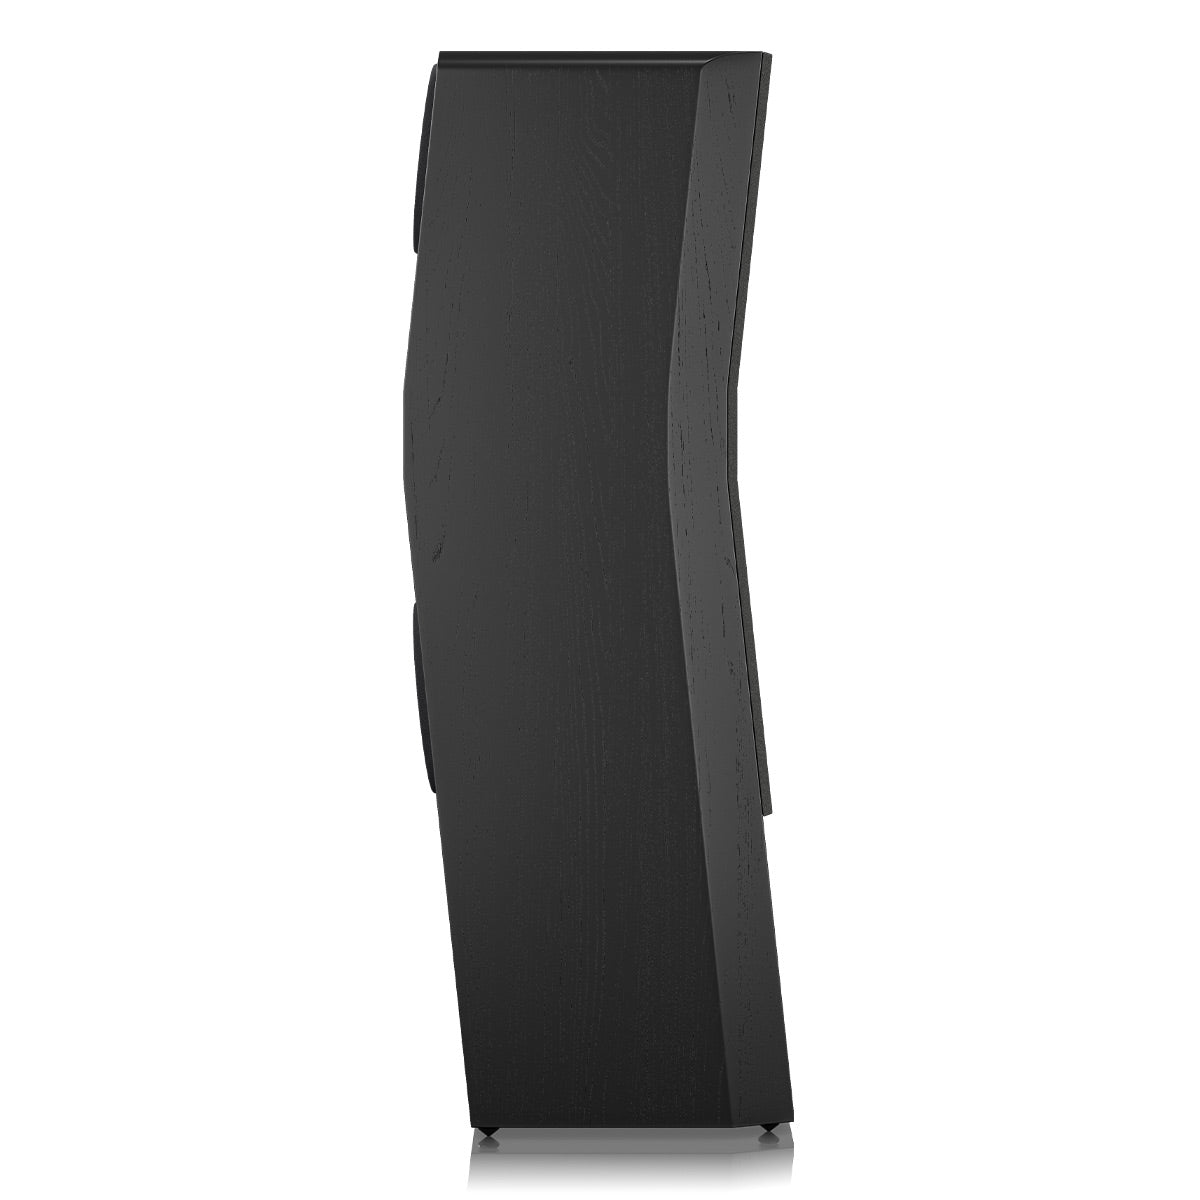 SVS Ultra Evolution Pinnacle Tower Speaker with Quad 8" Woofers - Each (Black Oak)